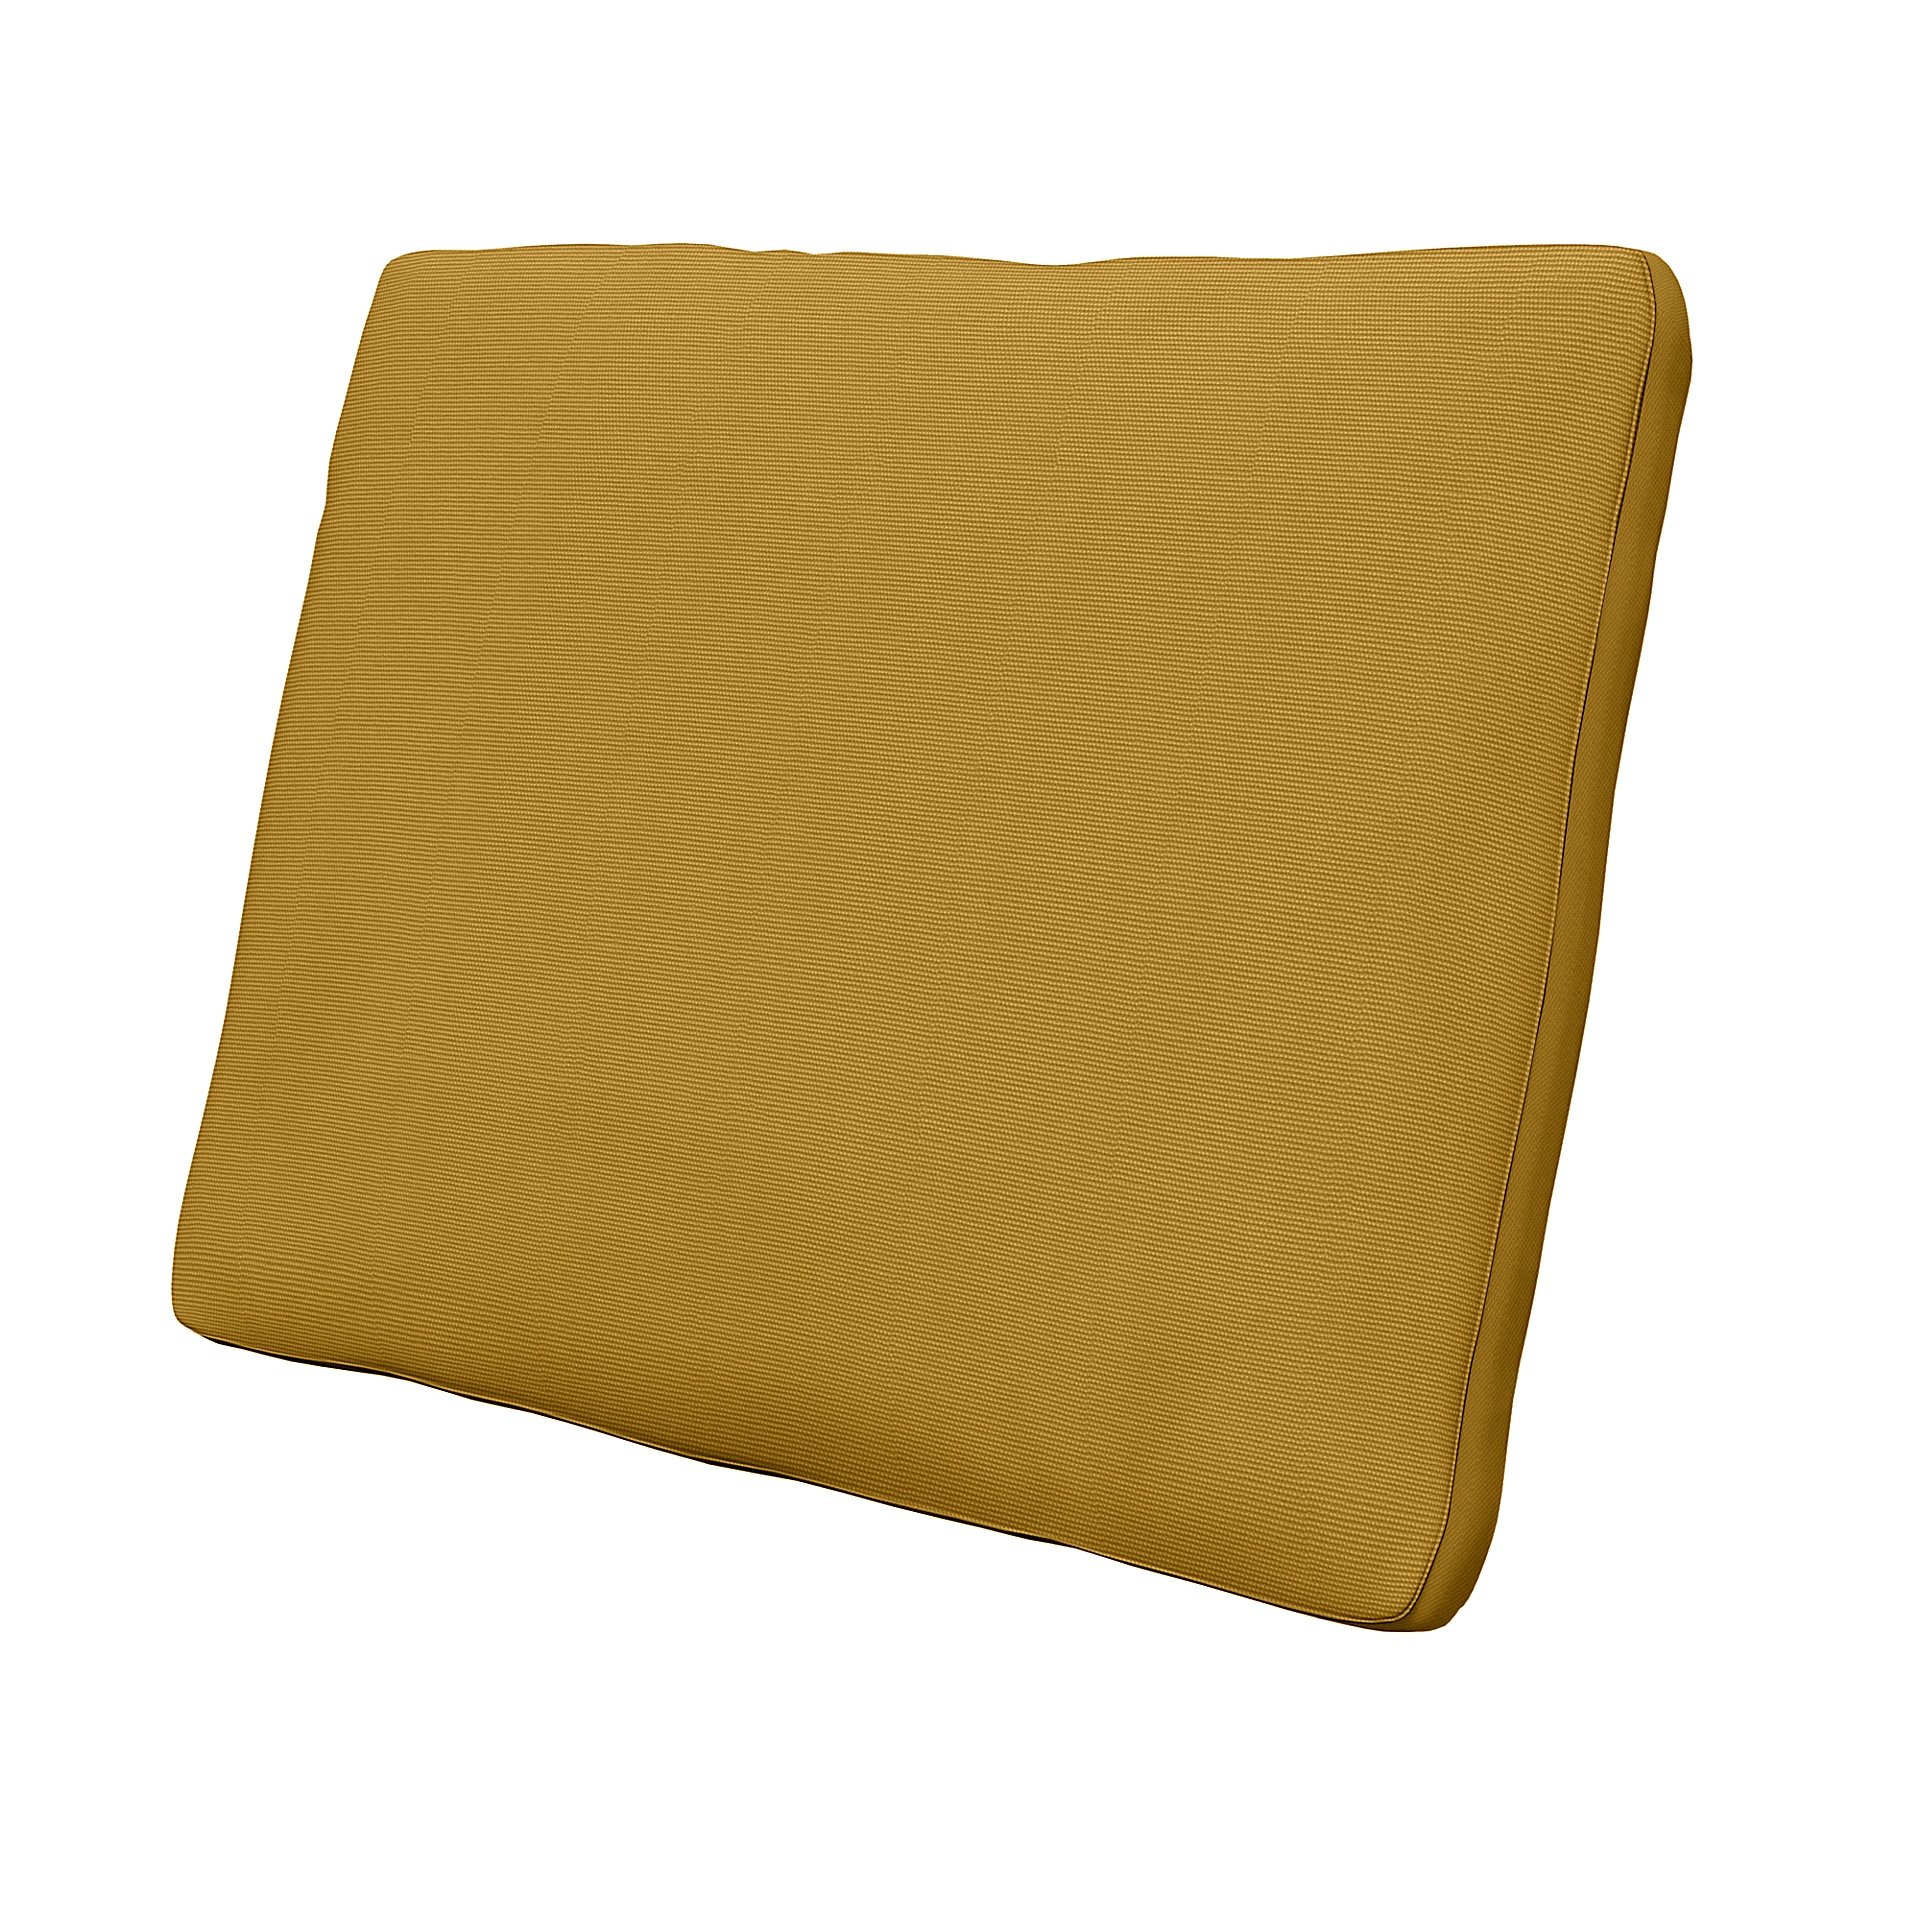 IKEA - Cushion Cover Karlstad 58x48x5 cm, Honey Mustard, Cotton - Bemz